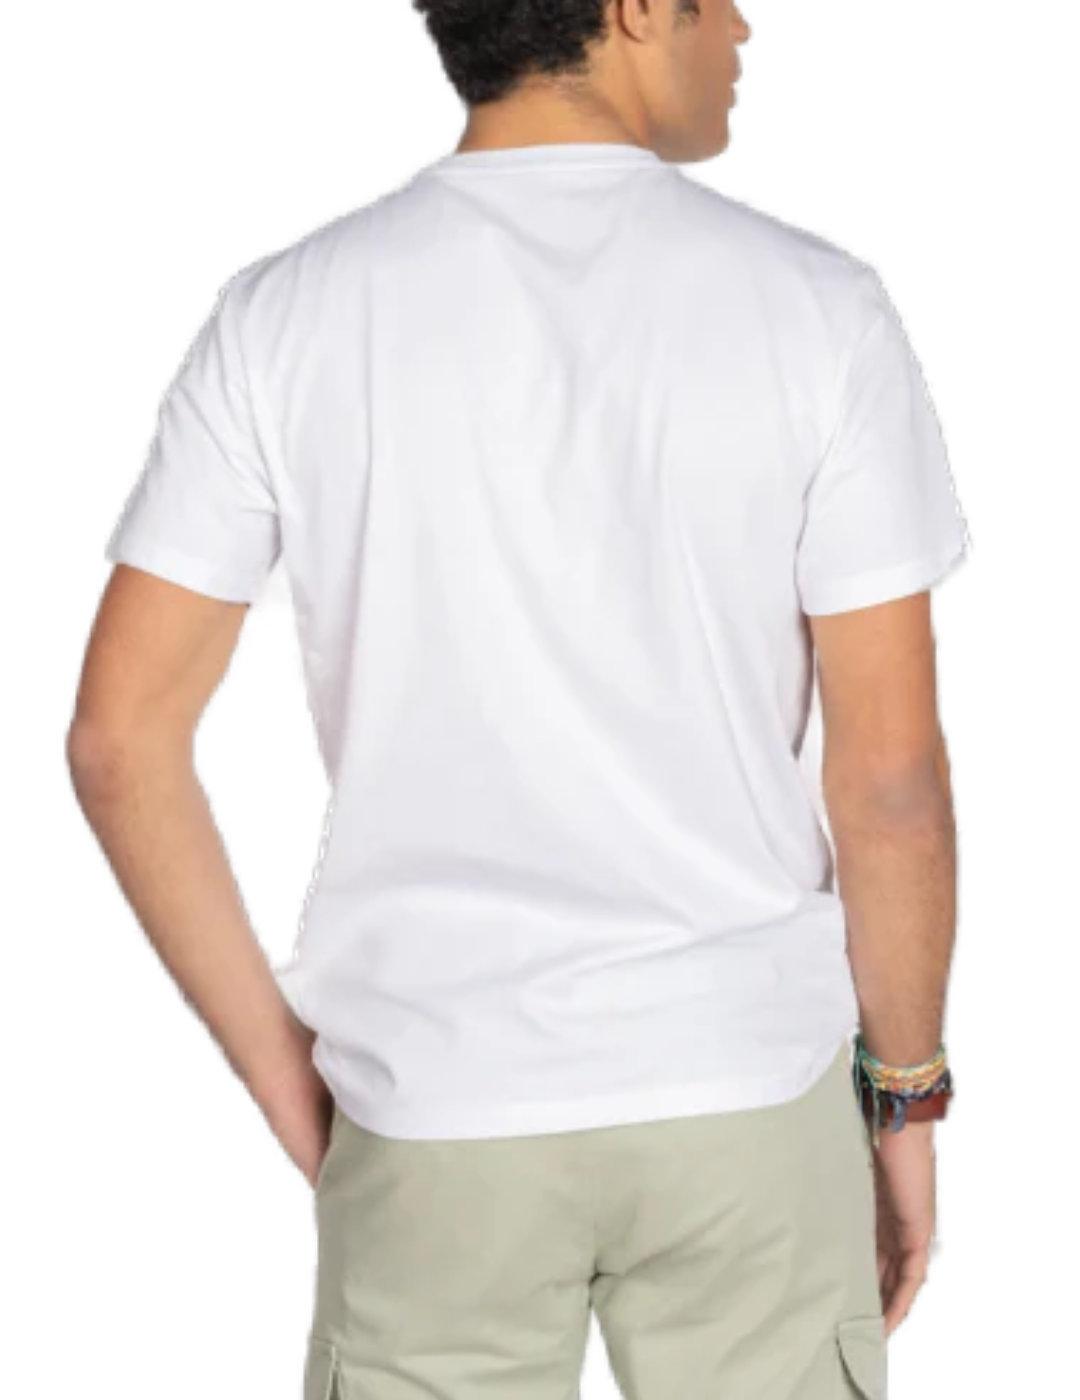 Camiseta Harper&Neyer Pocket blanca manga corta para hombre